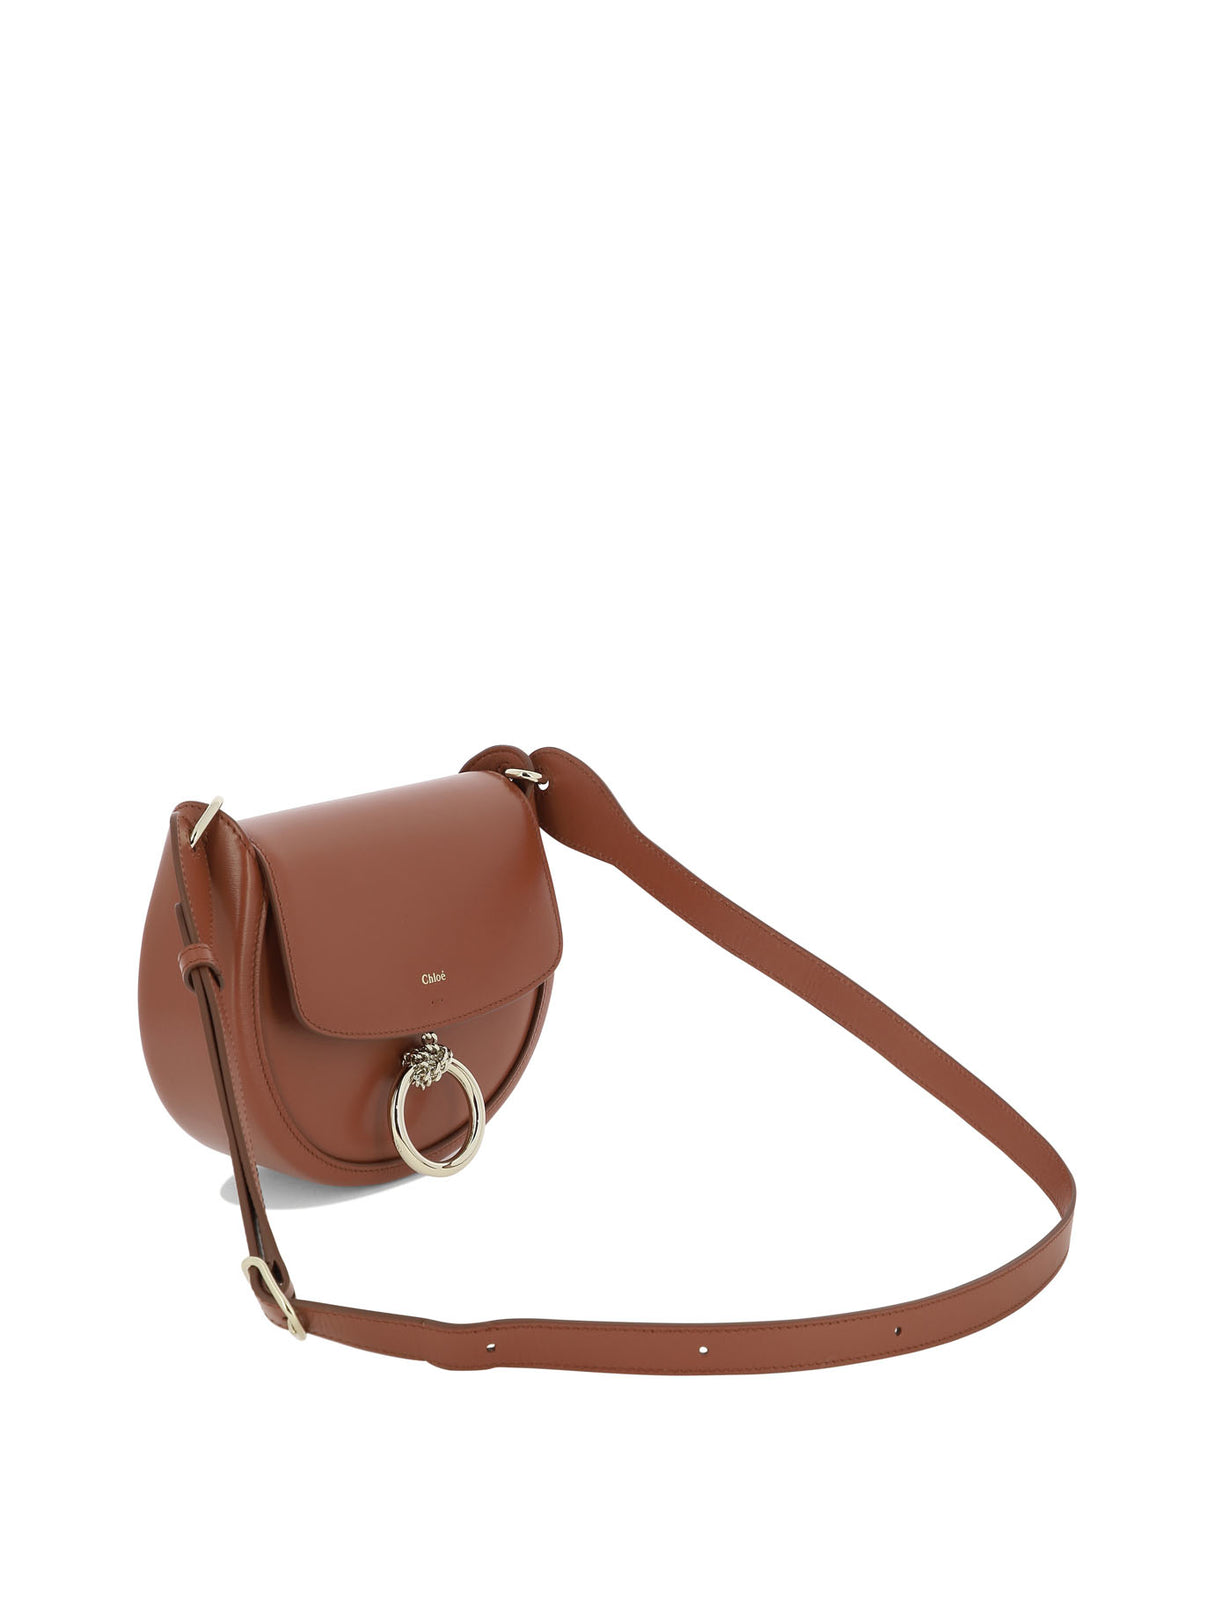 CHLOÉ Brown Leather Crossbody Handbag for Women by Luxury Fashion House